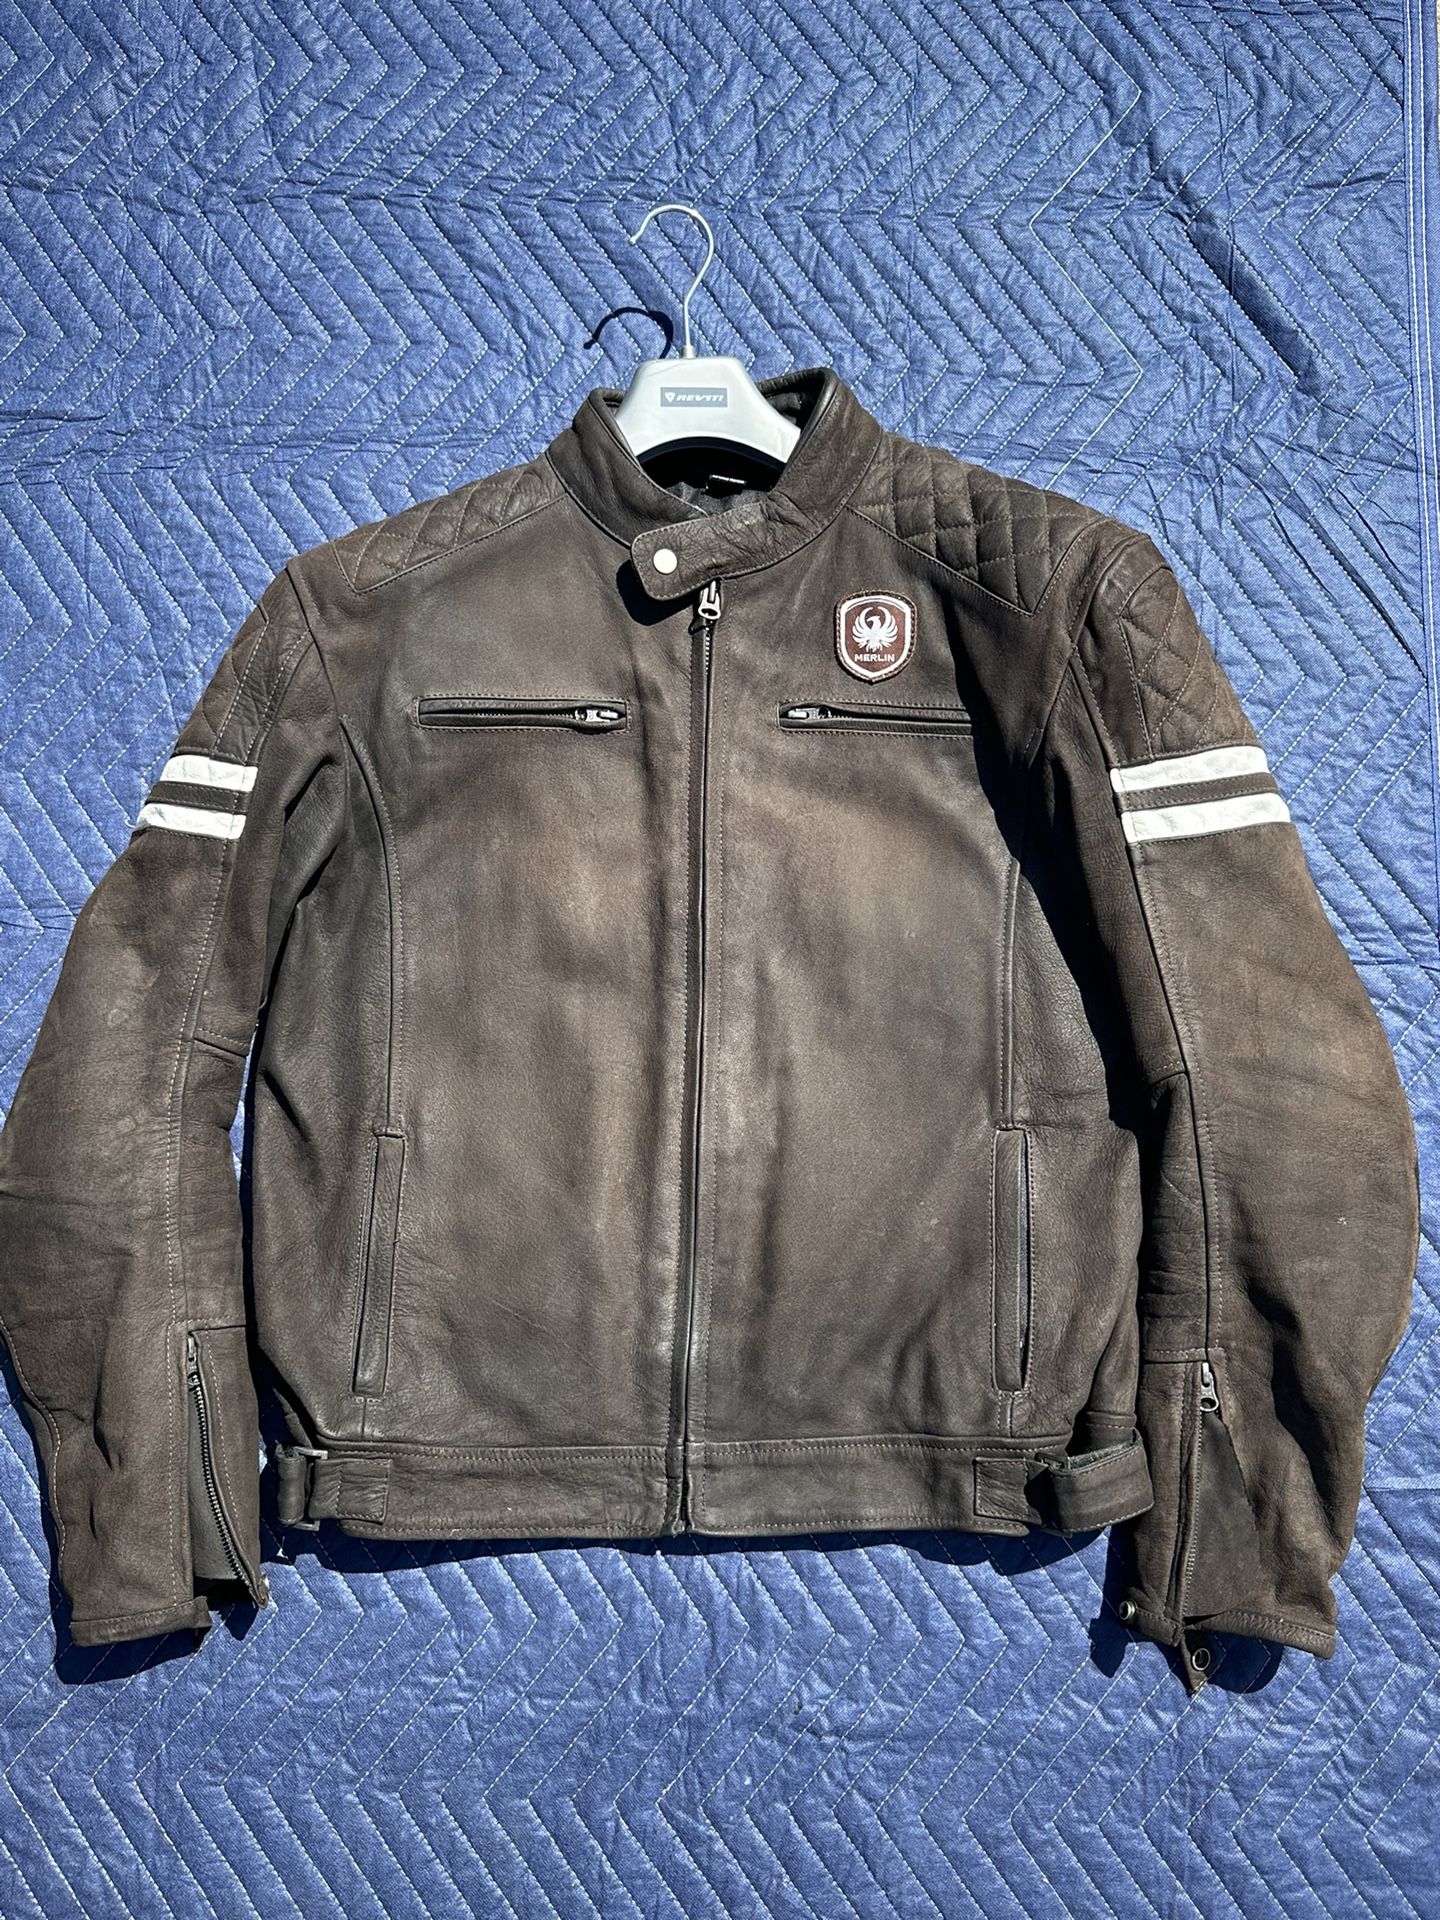 Merlin Hixon Heritage Motorcycle Leather Jacket Size 44 Dark Brown